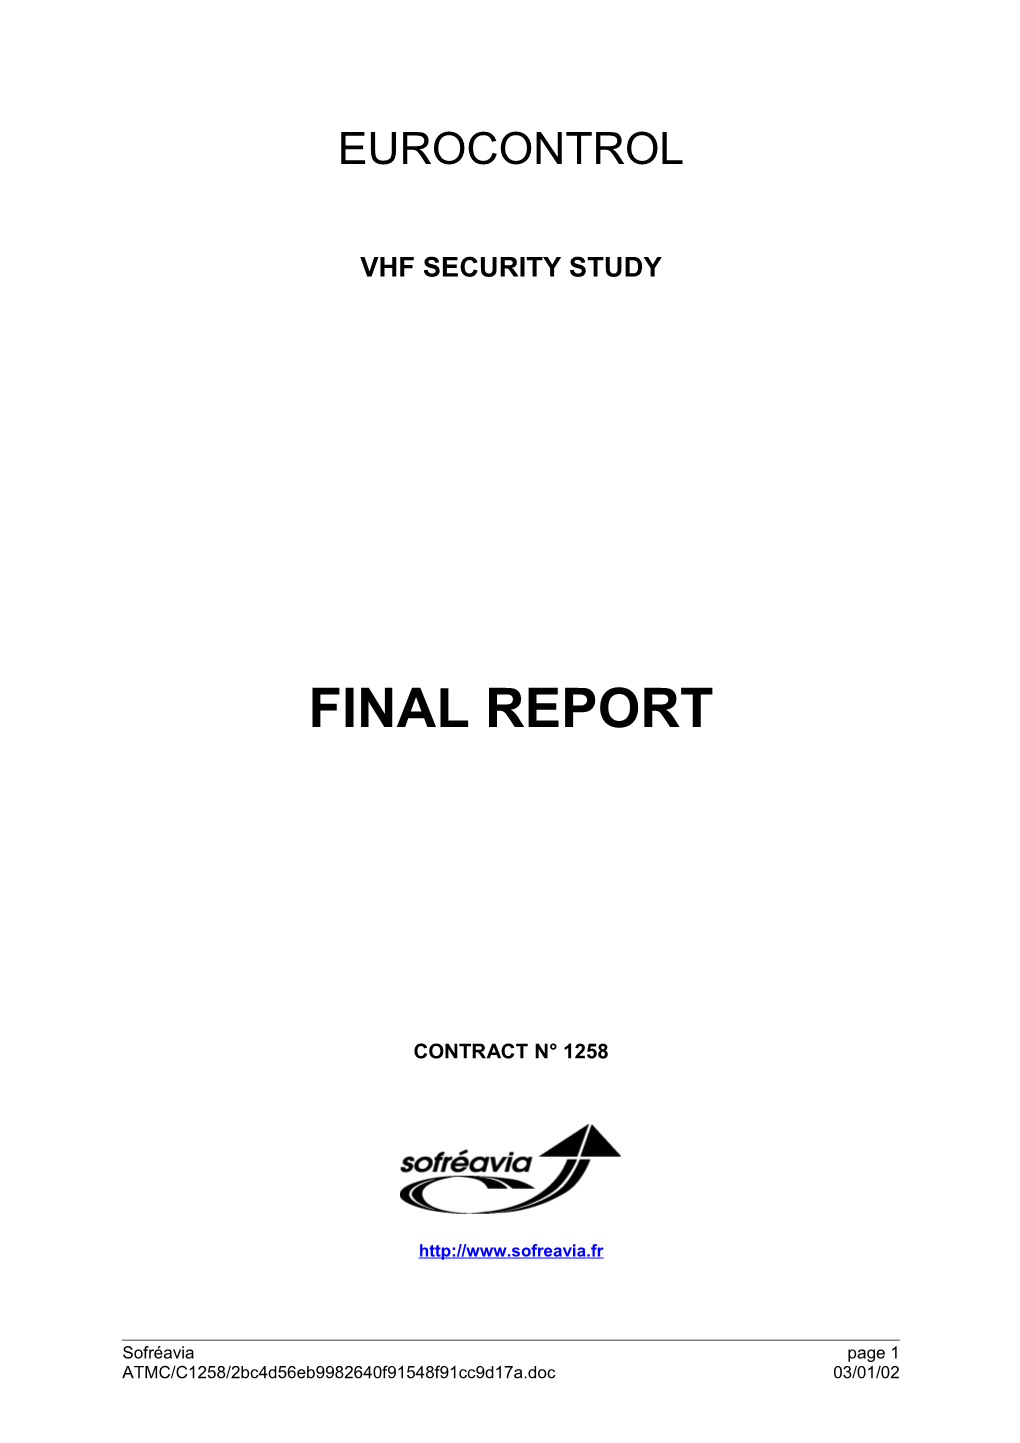 VHF Security Study Final Report (Eurocontrol)